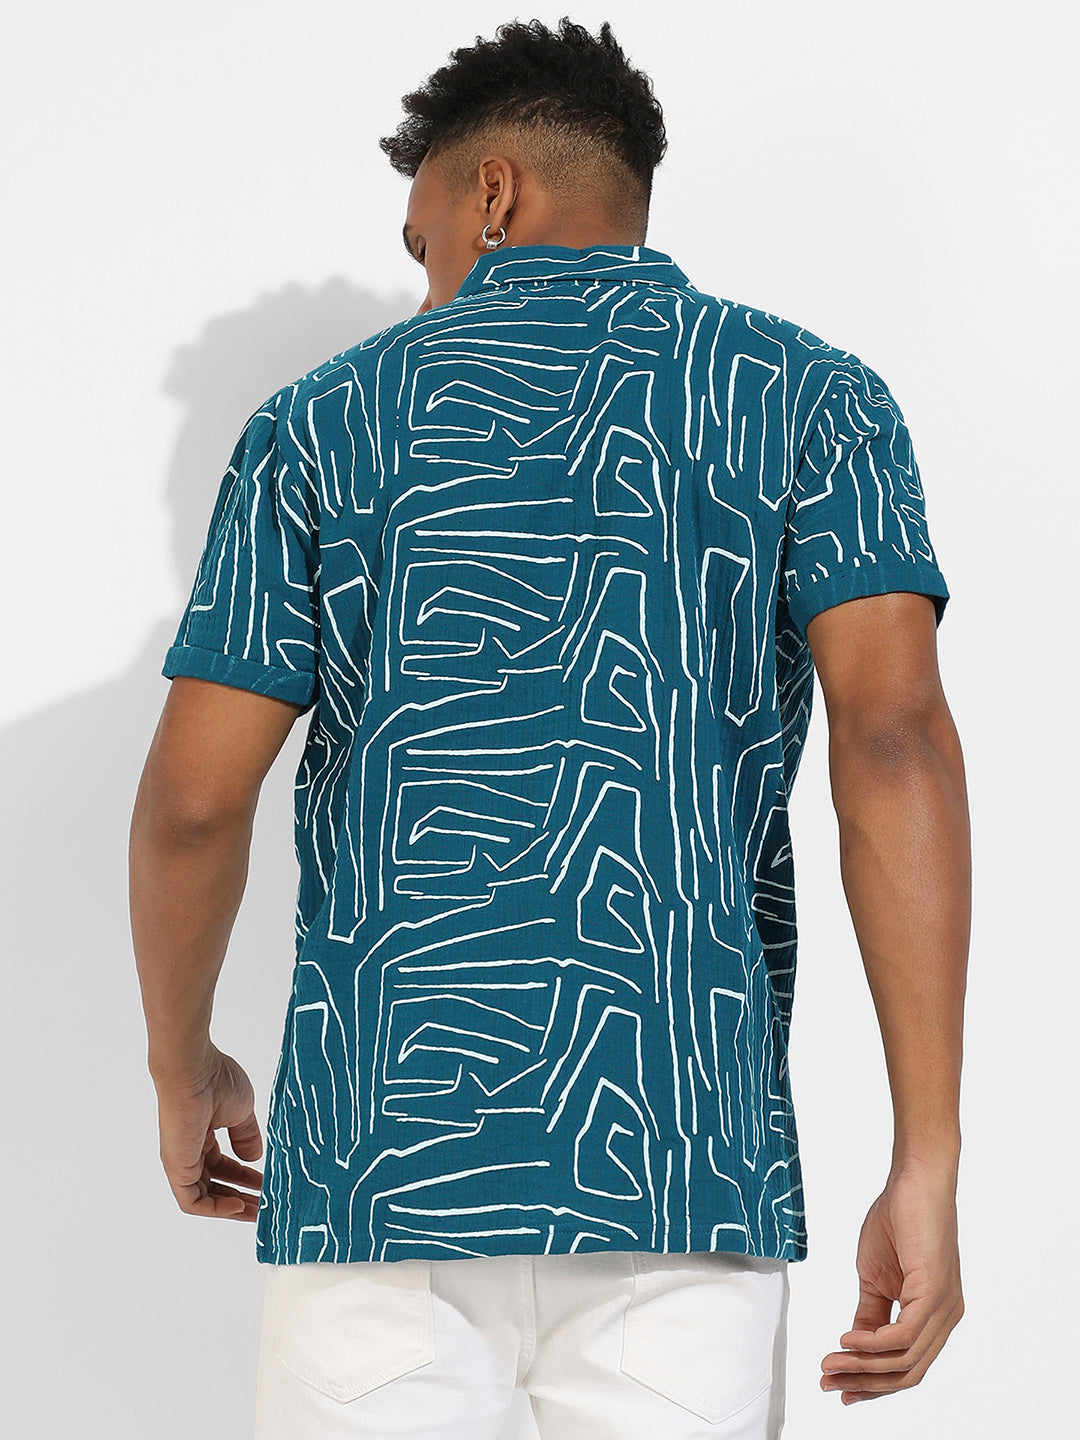 Abstract Lines Print Shirt